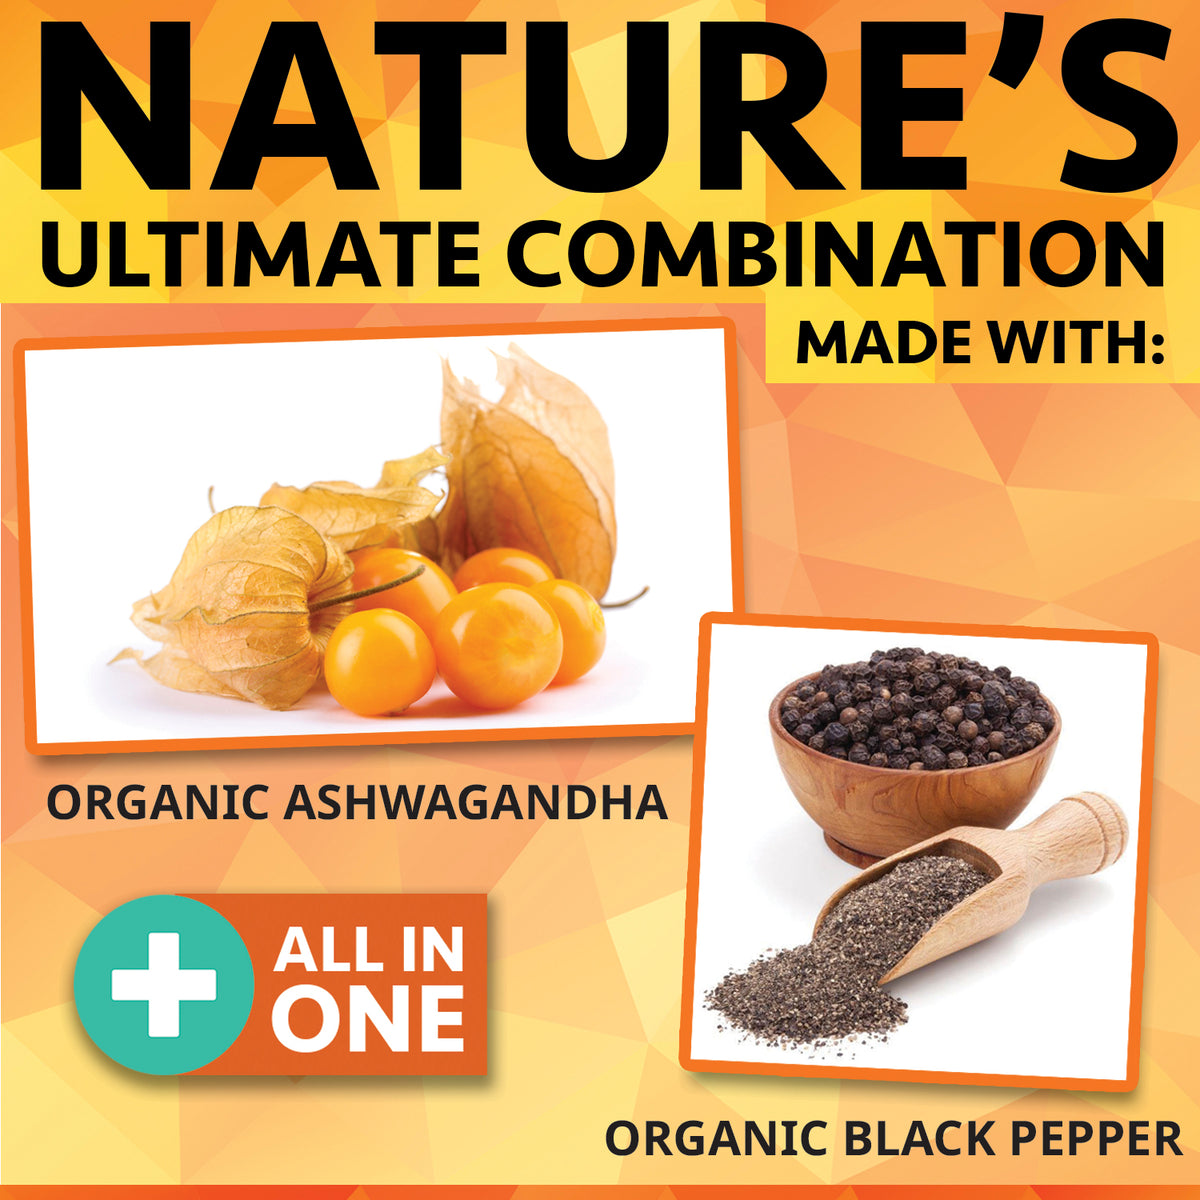 A combination of organic ashwagandha and organic black pepper